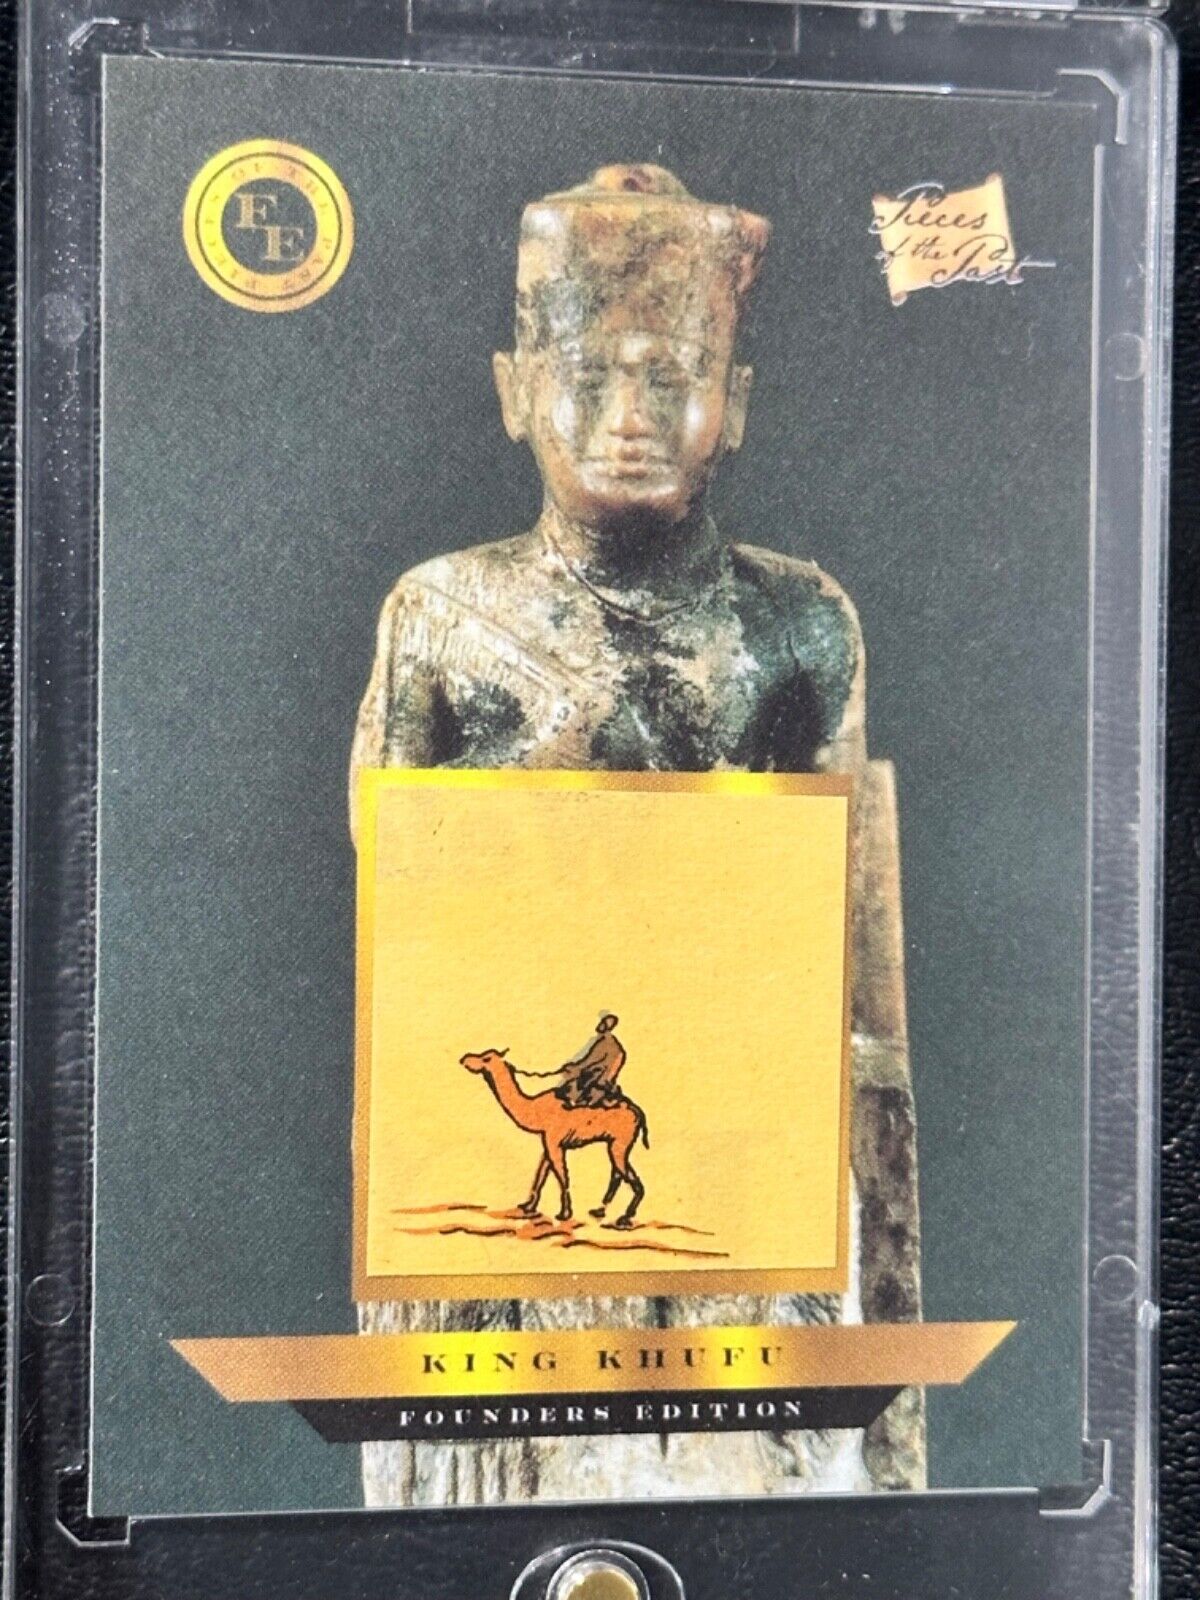 King Khufu - Very Rare 